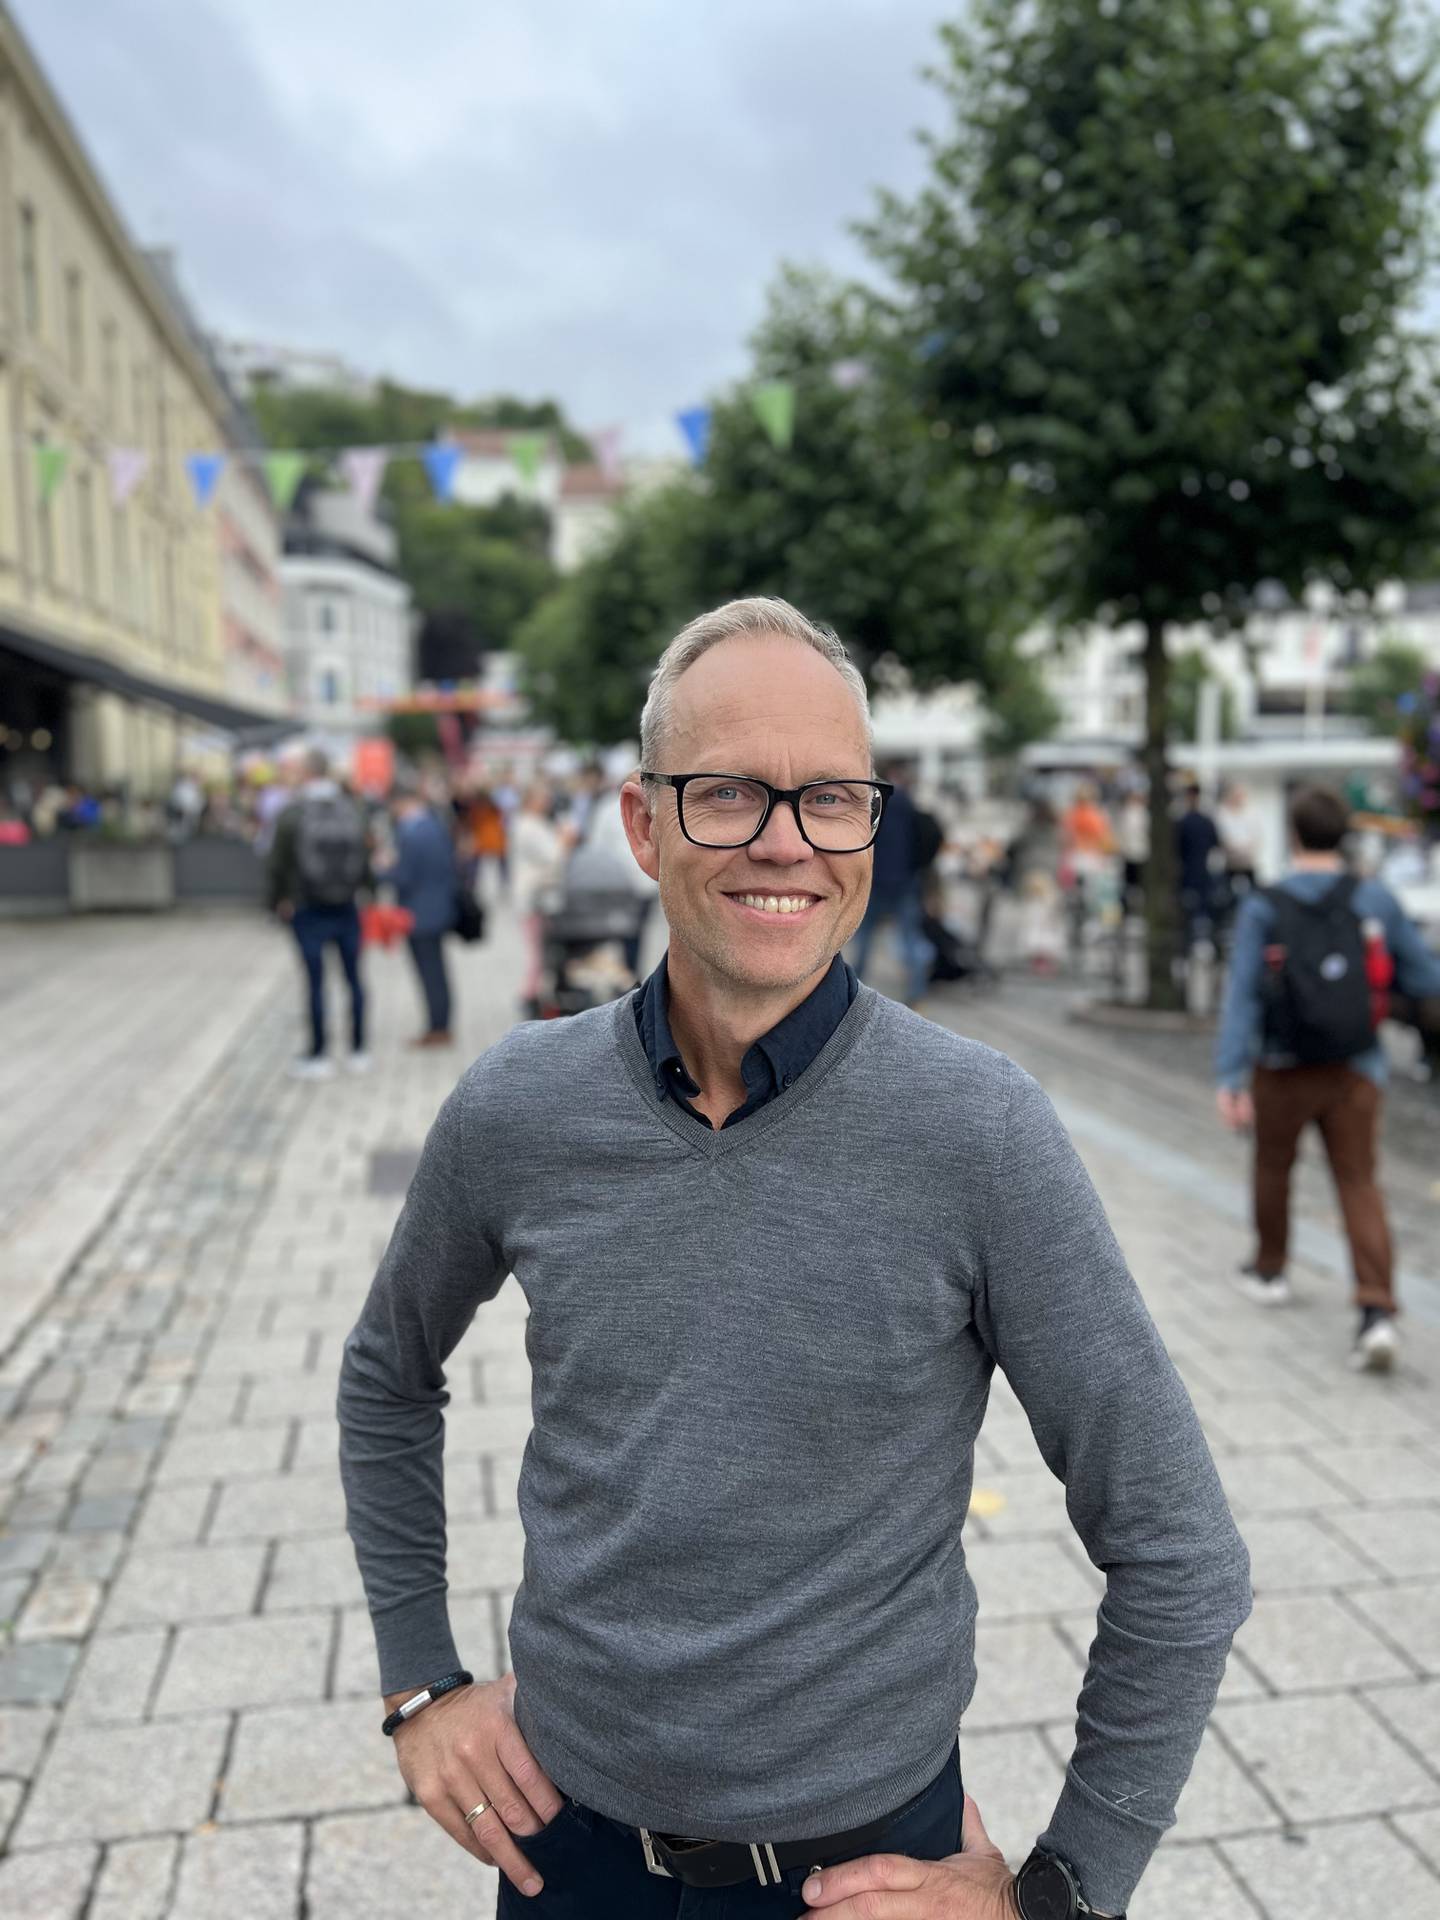 Sjeføkonom Kyrre Knudsen fra SR-Bank er på plass i Arendal, hvor den årlige politiske uken arrangeres i august